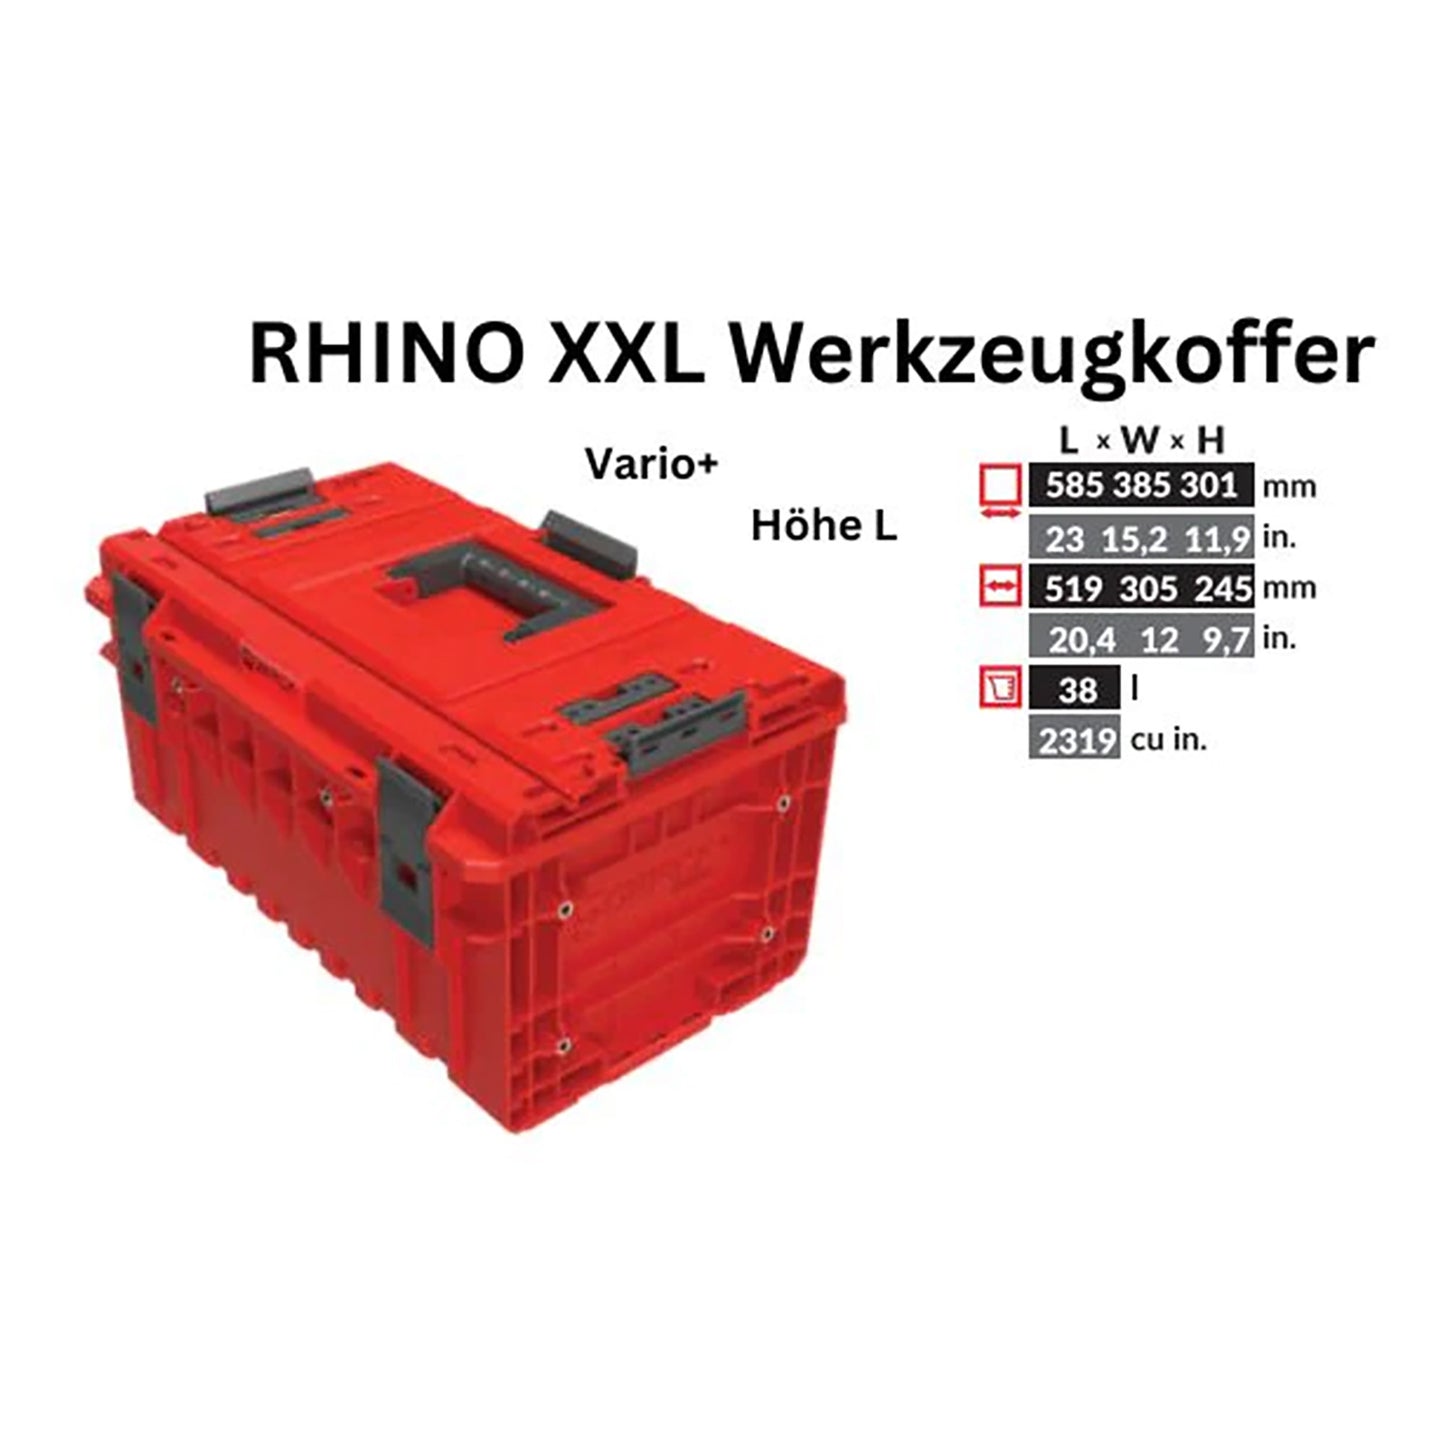 Toolbrothers RHINO XXL Werkzeugkoffer ULTRA Vario+ Höhe L Custom modularer Organizer 585 x 385 x 320 mm 38 l stapelbar IP66